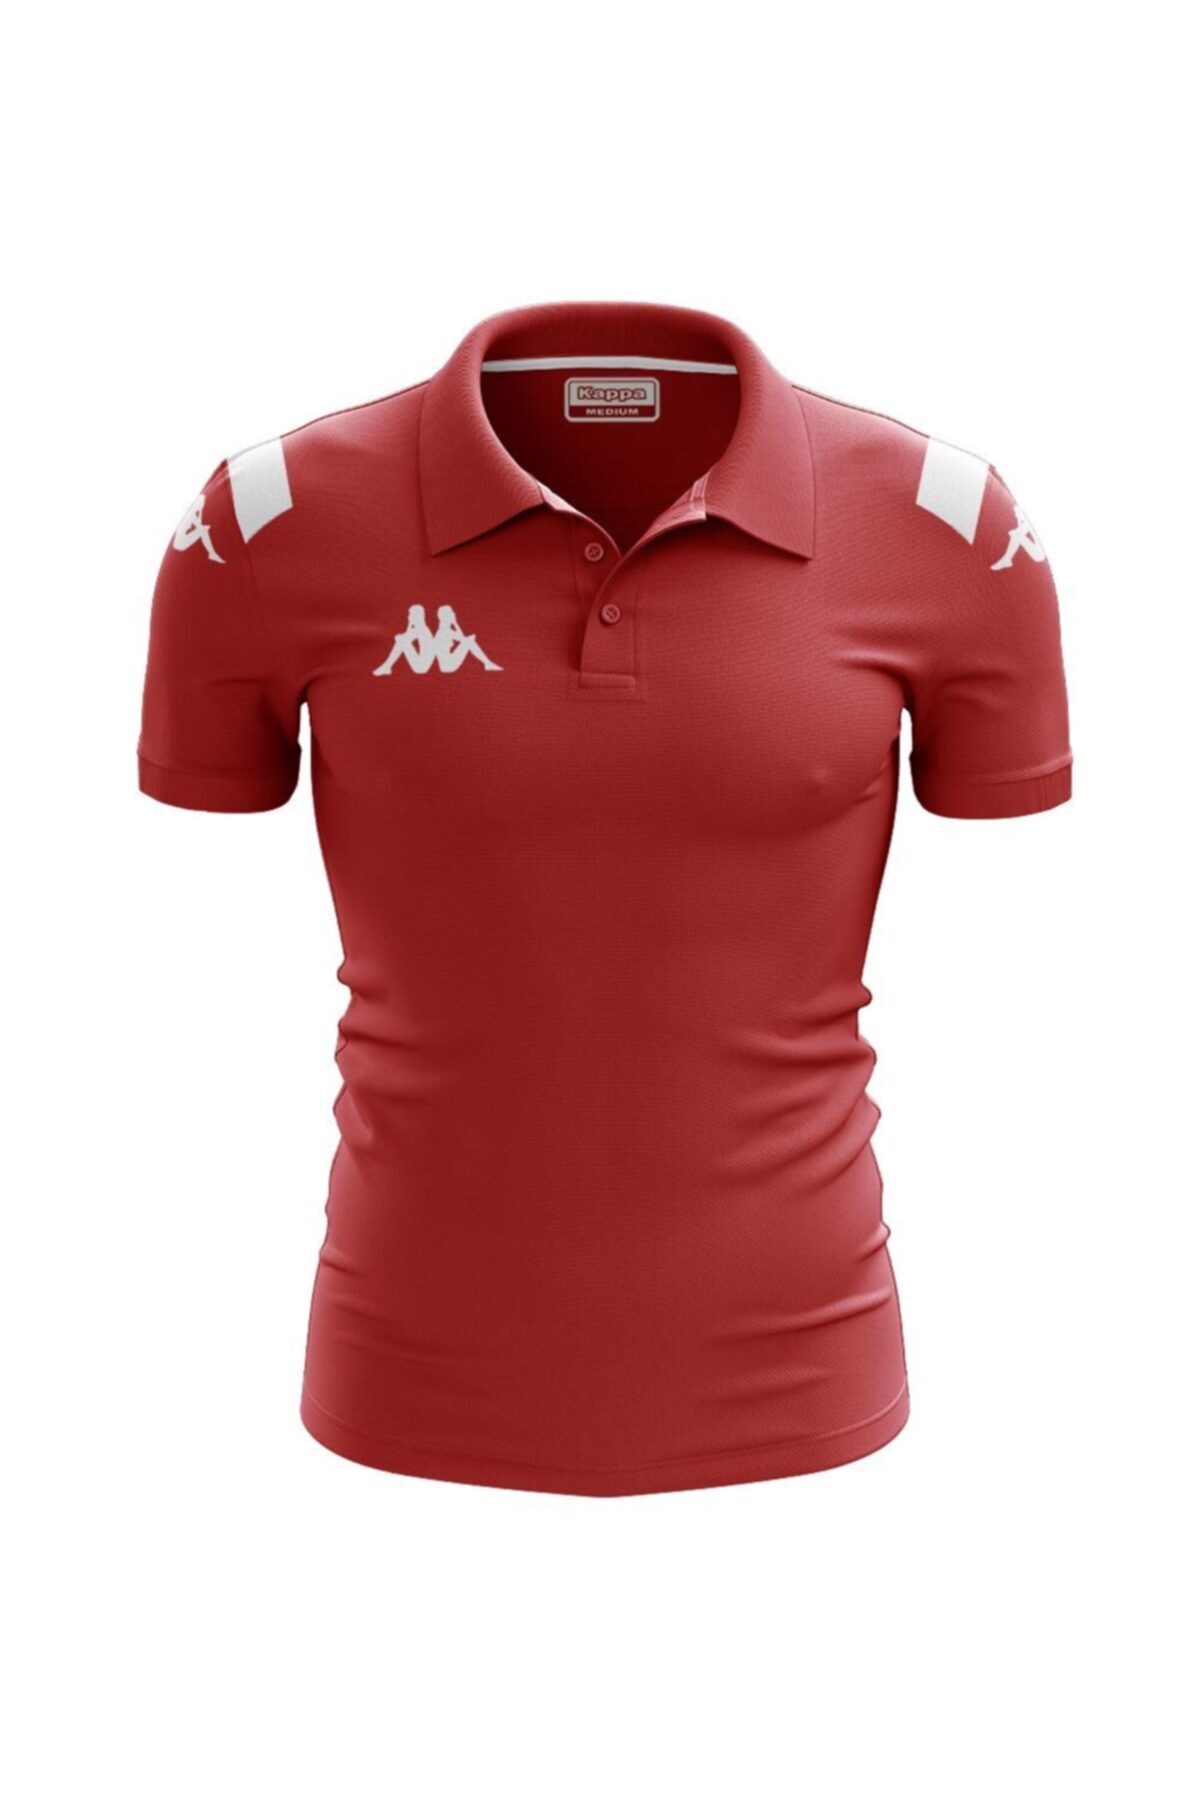 Kappa Player Kamp Polo T-shirt Abıang4 4team Kırmızı